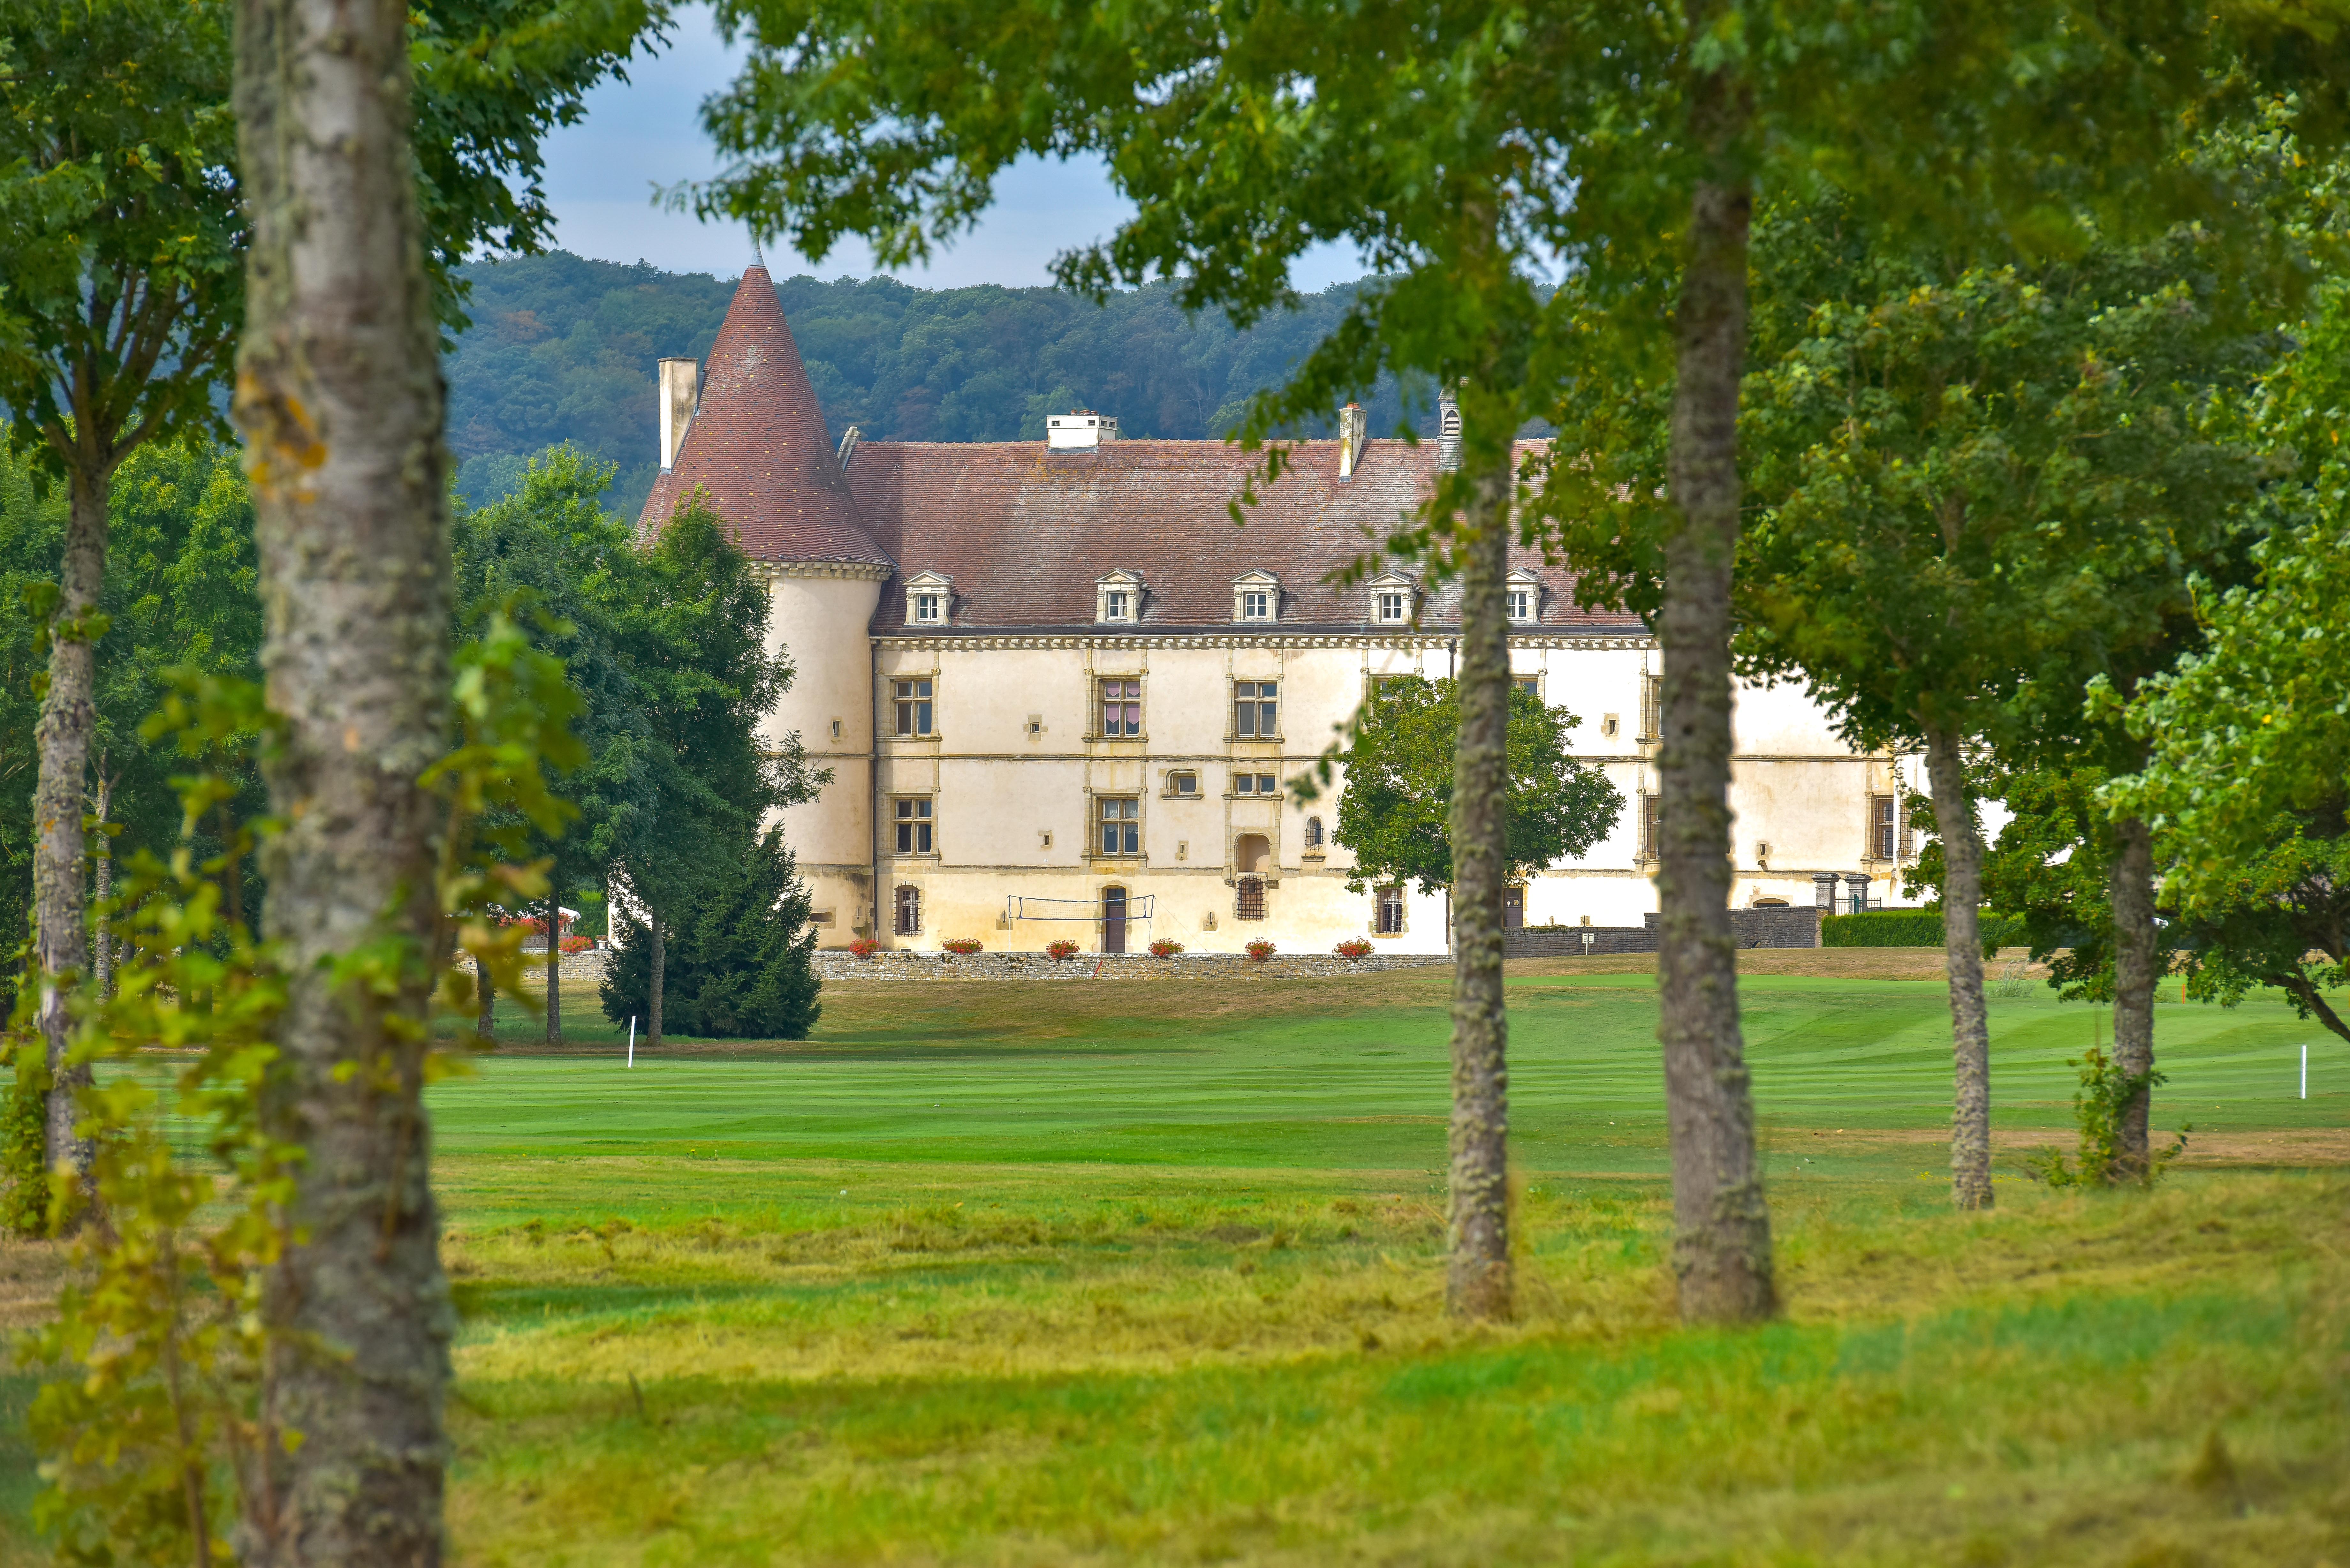 Golf Château de Chailly